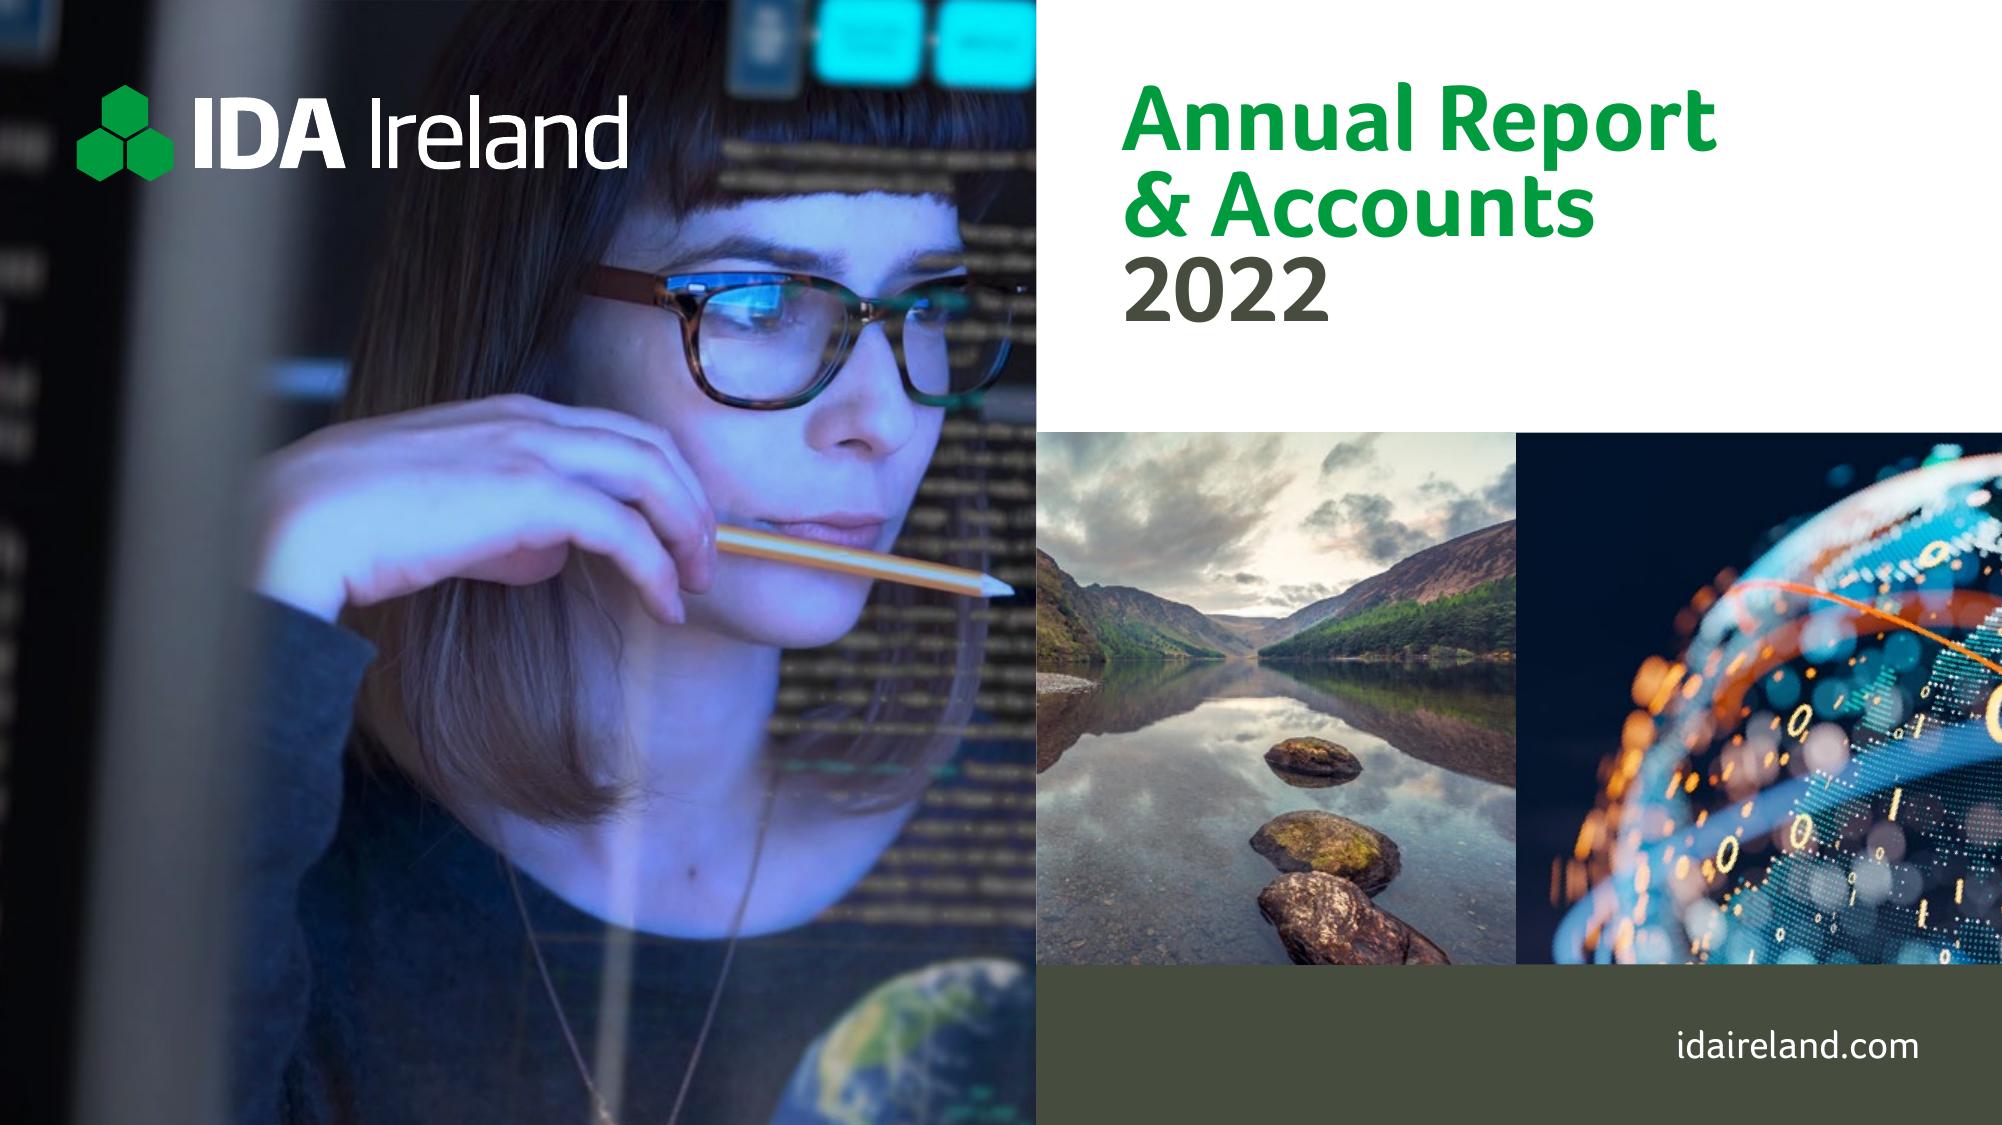 IDAIRELAND 2022 Annual Report